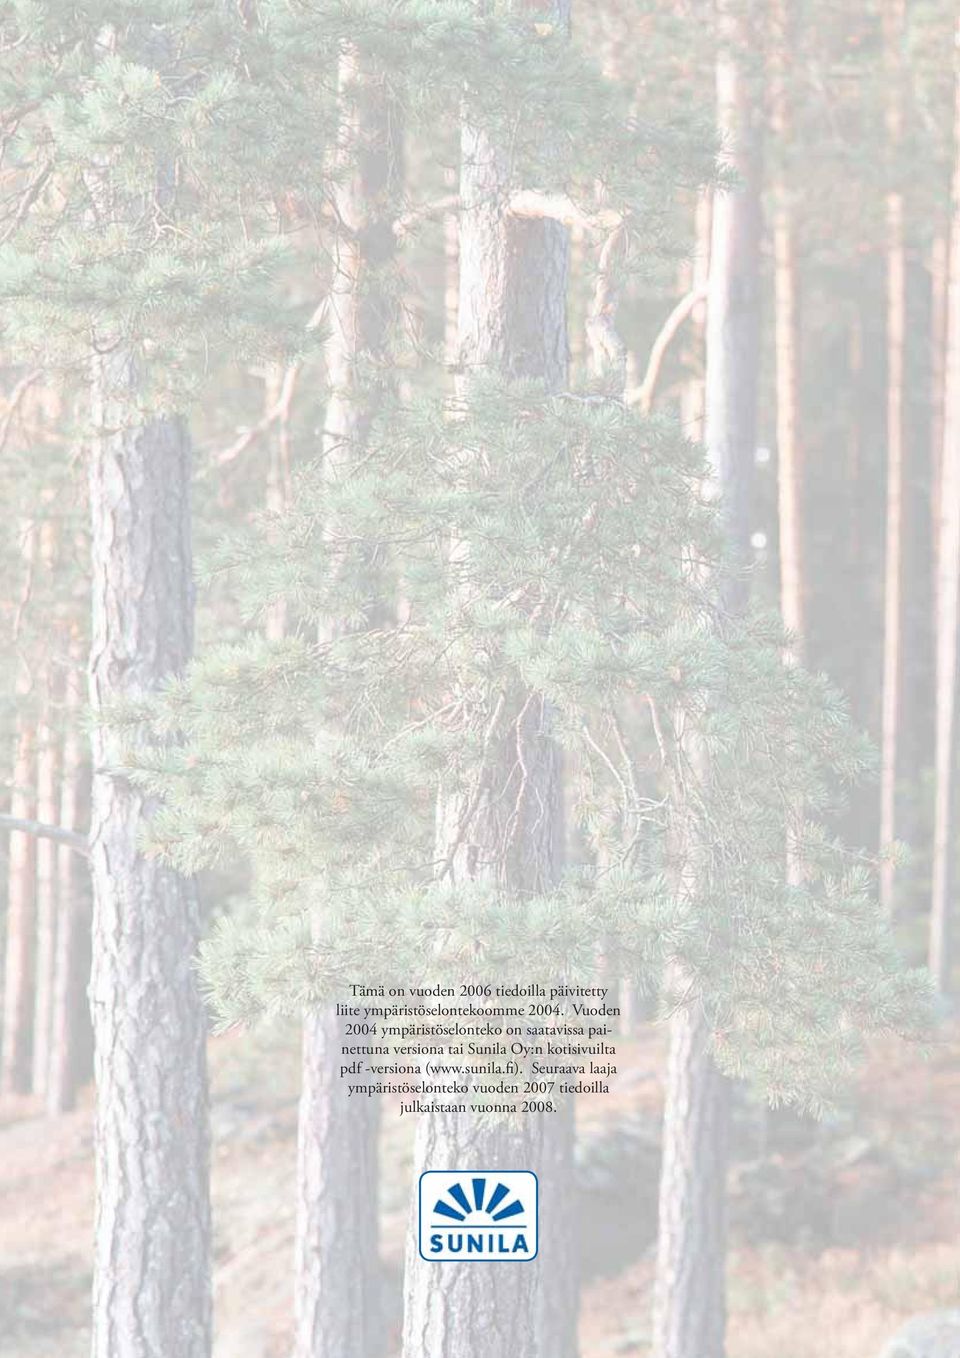 tai Sunila Oy:n kotisivuilta pdf -versiona (www.sunila.fi).